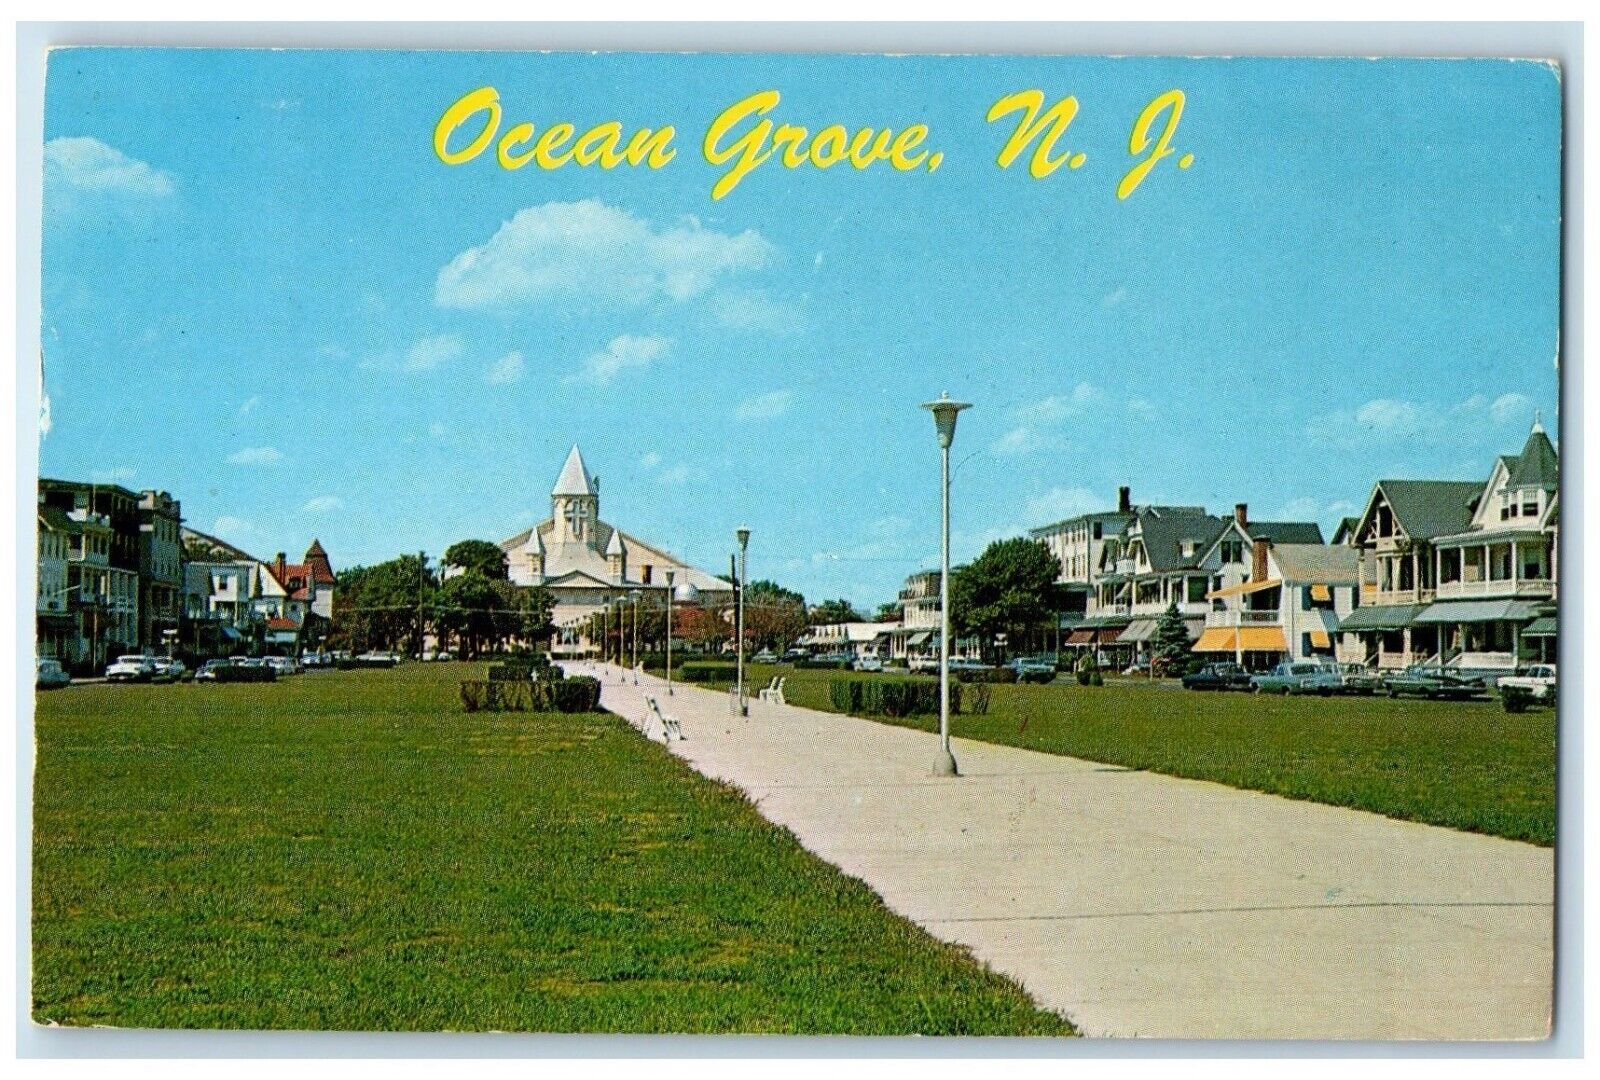 1968 Hotel Lined Pathway Atlantic Auditorium Ocean Grove New Jersey NJ Postcard